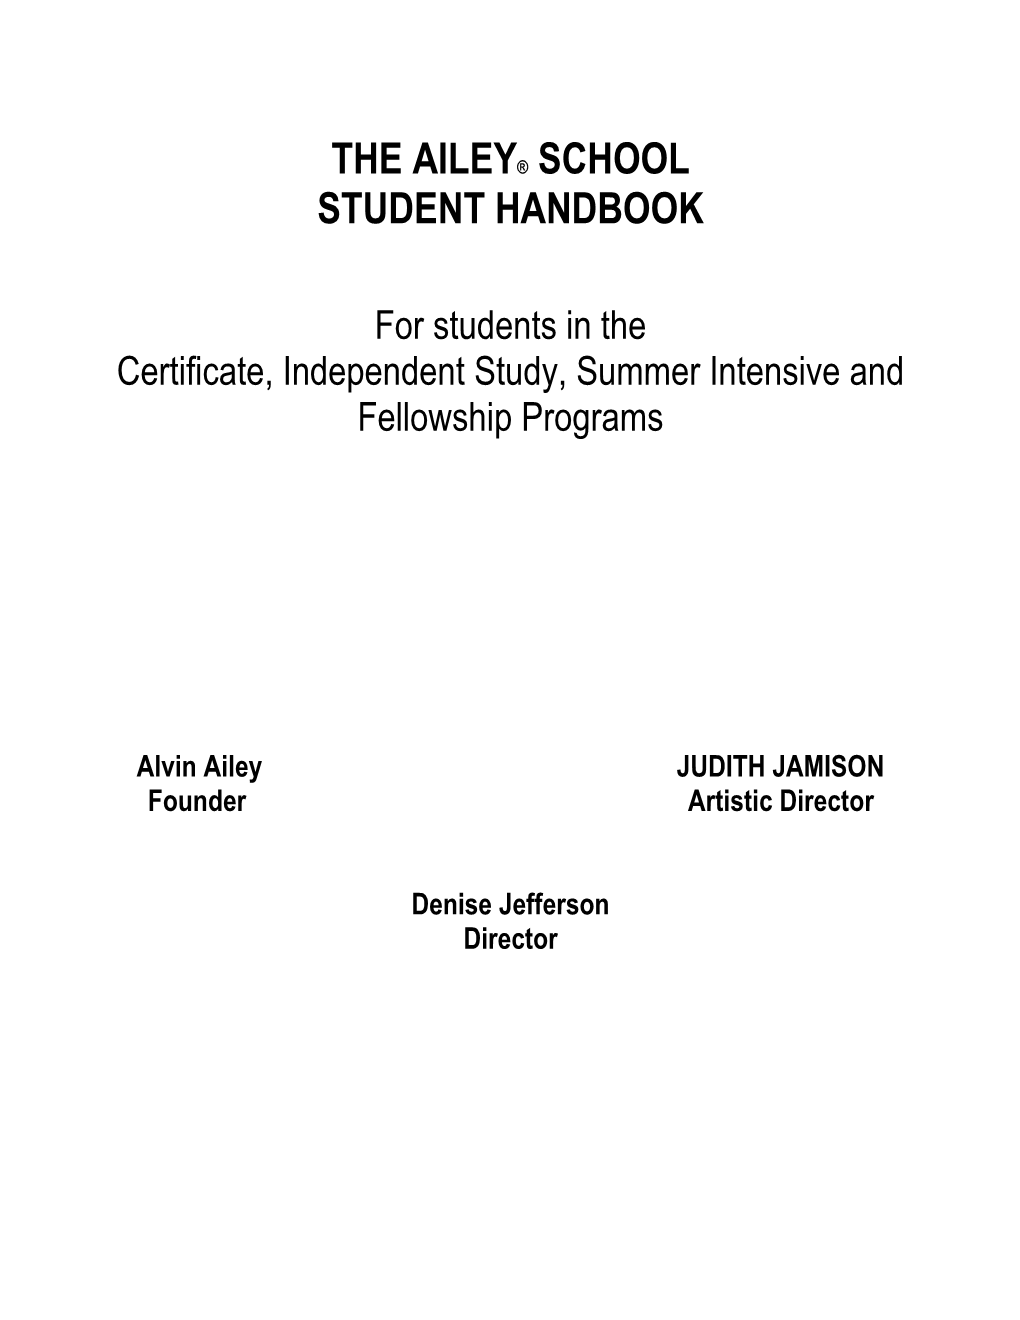 The Ailey® School Student Handbook